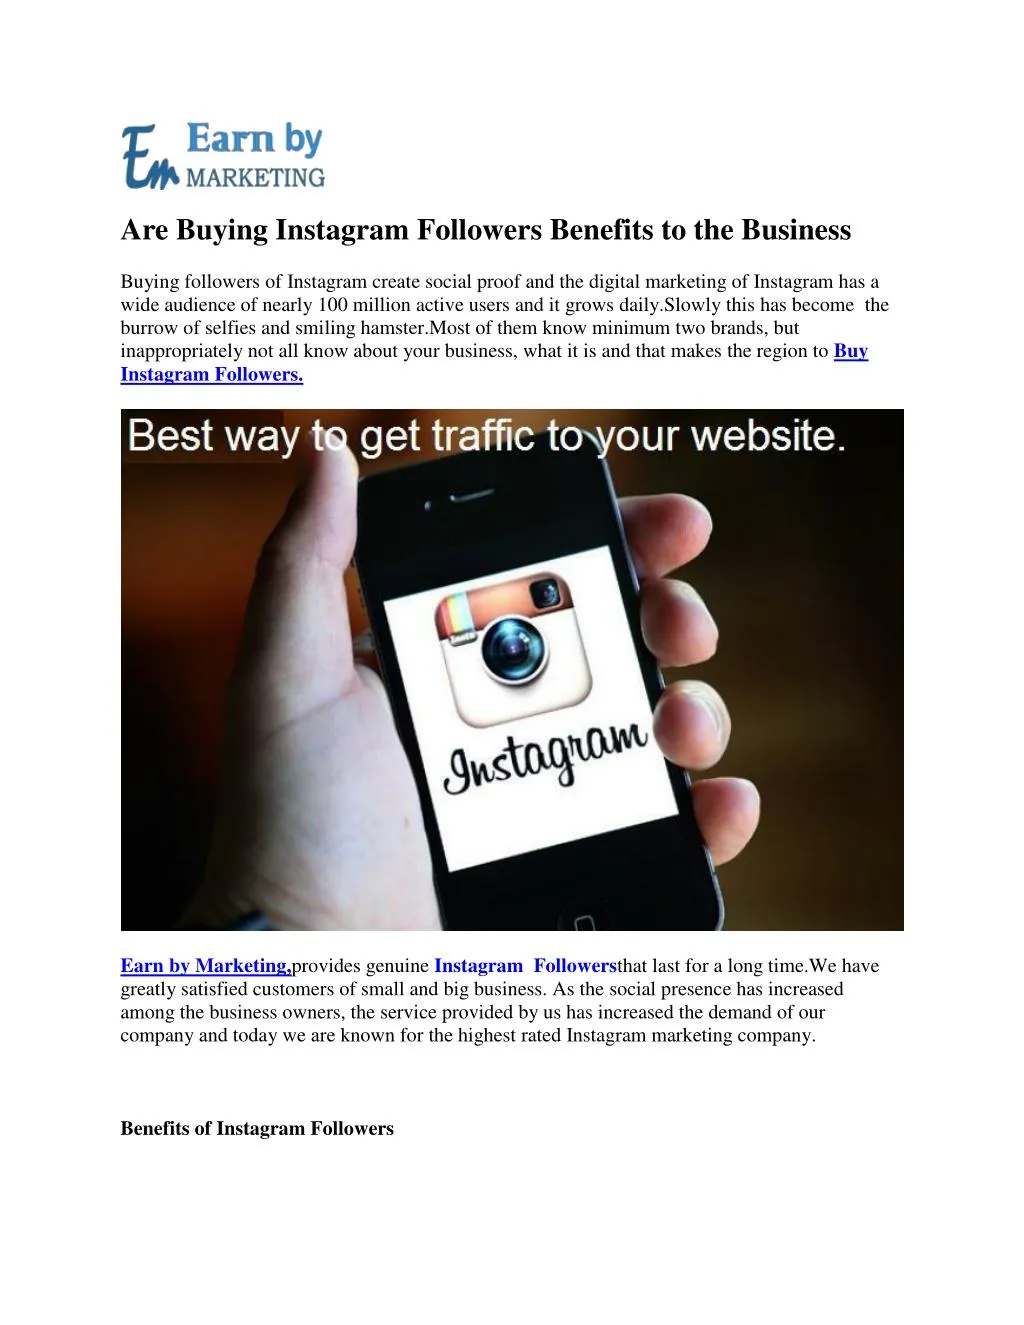 Instagram followers marketing company